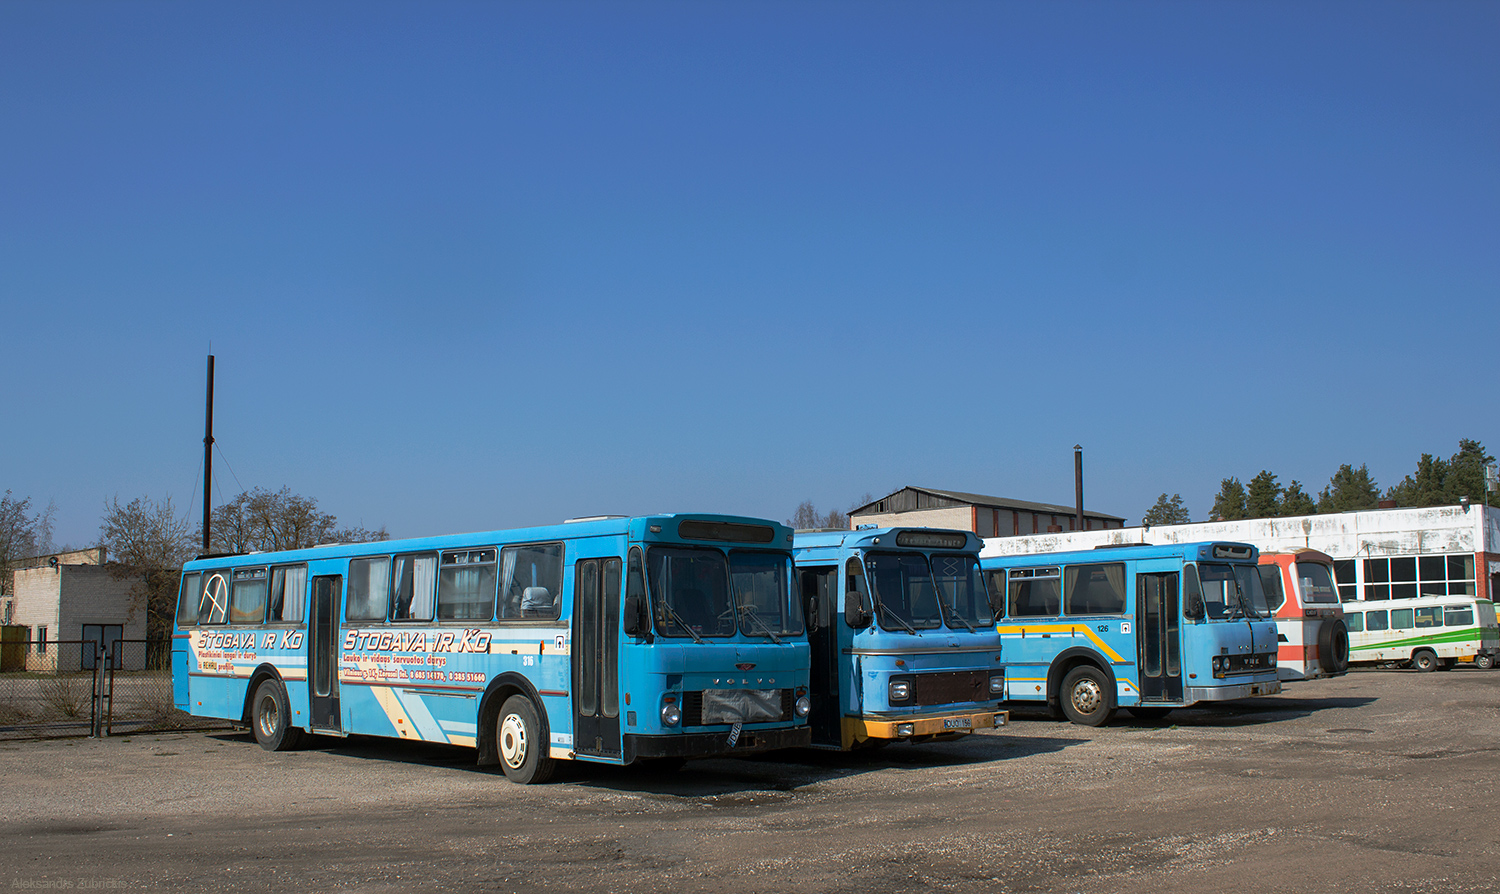 Lithuania, VBK M41 # 316; Lithuania — Bus depots